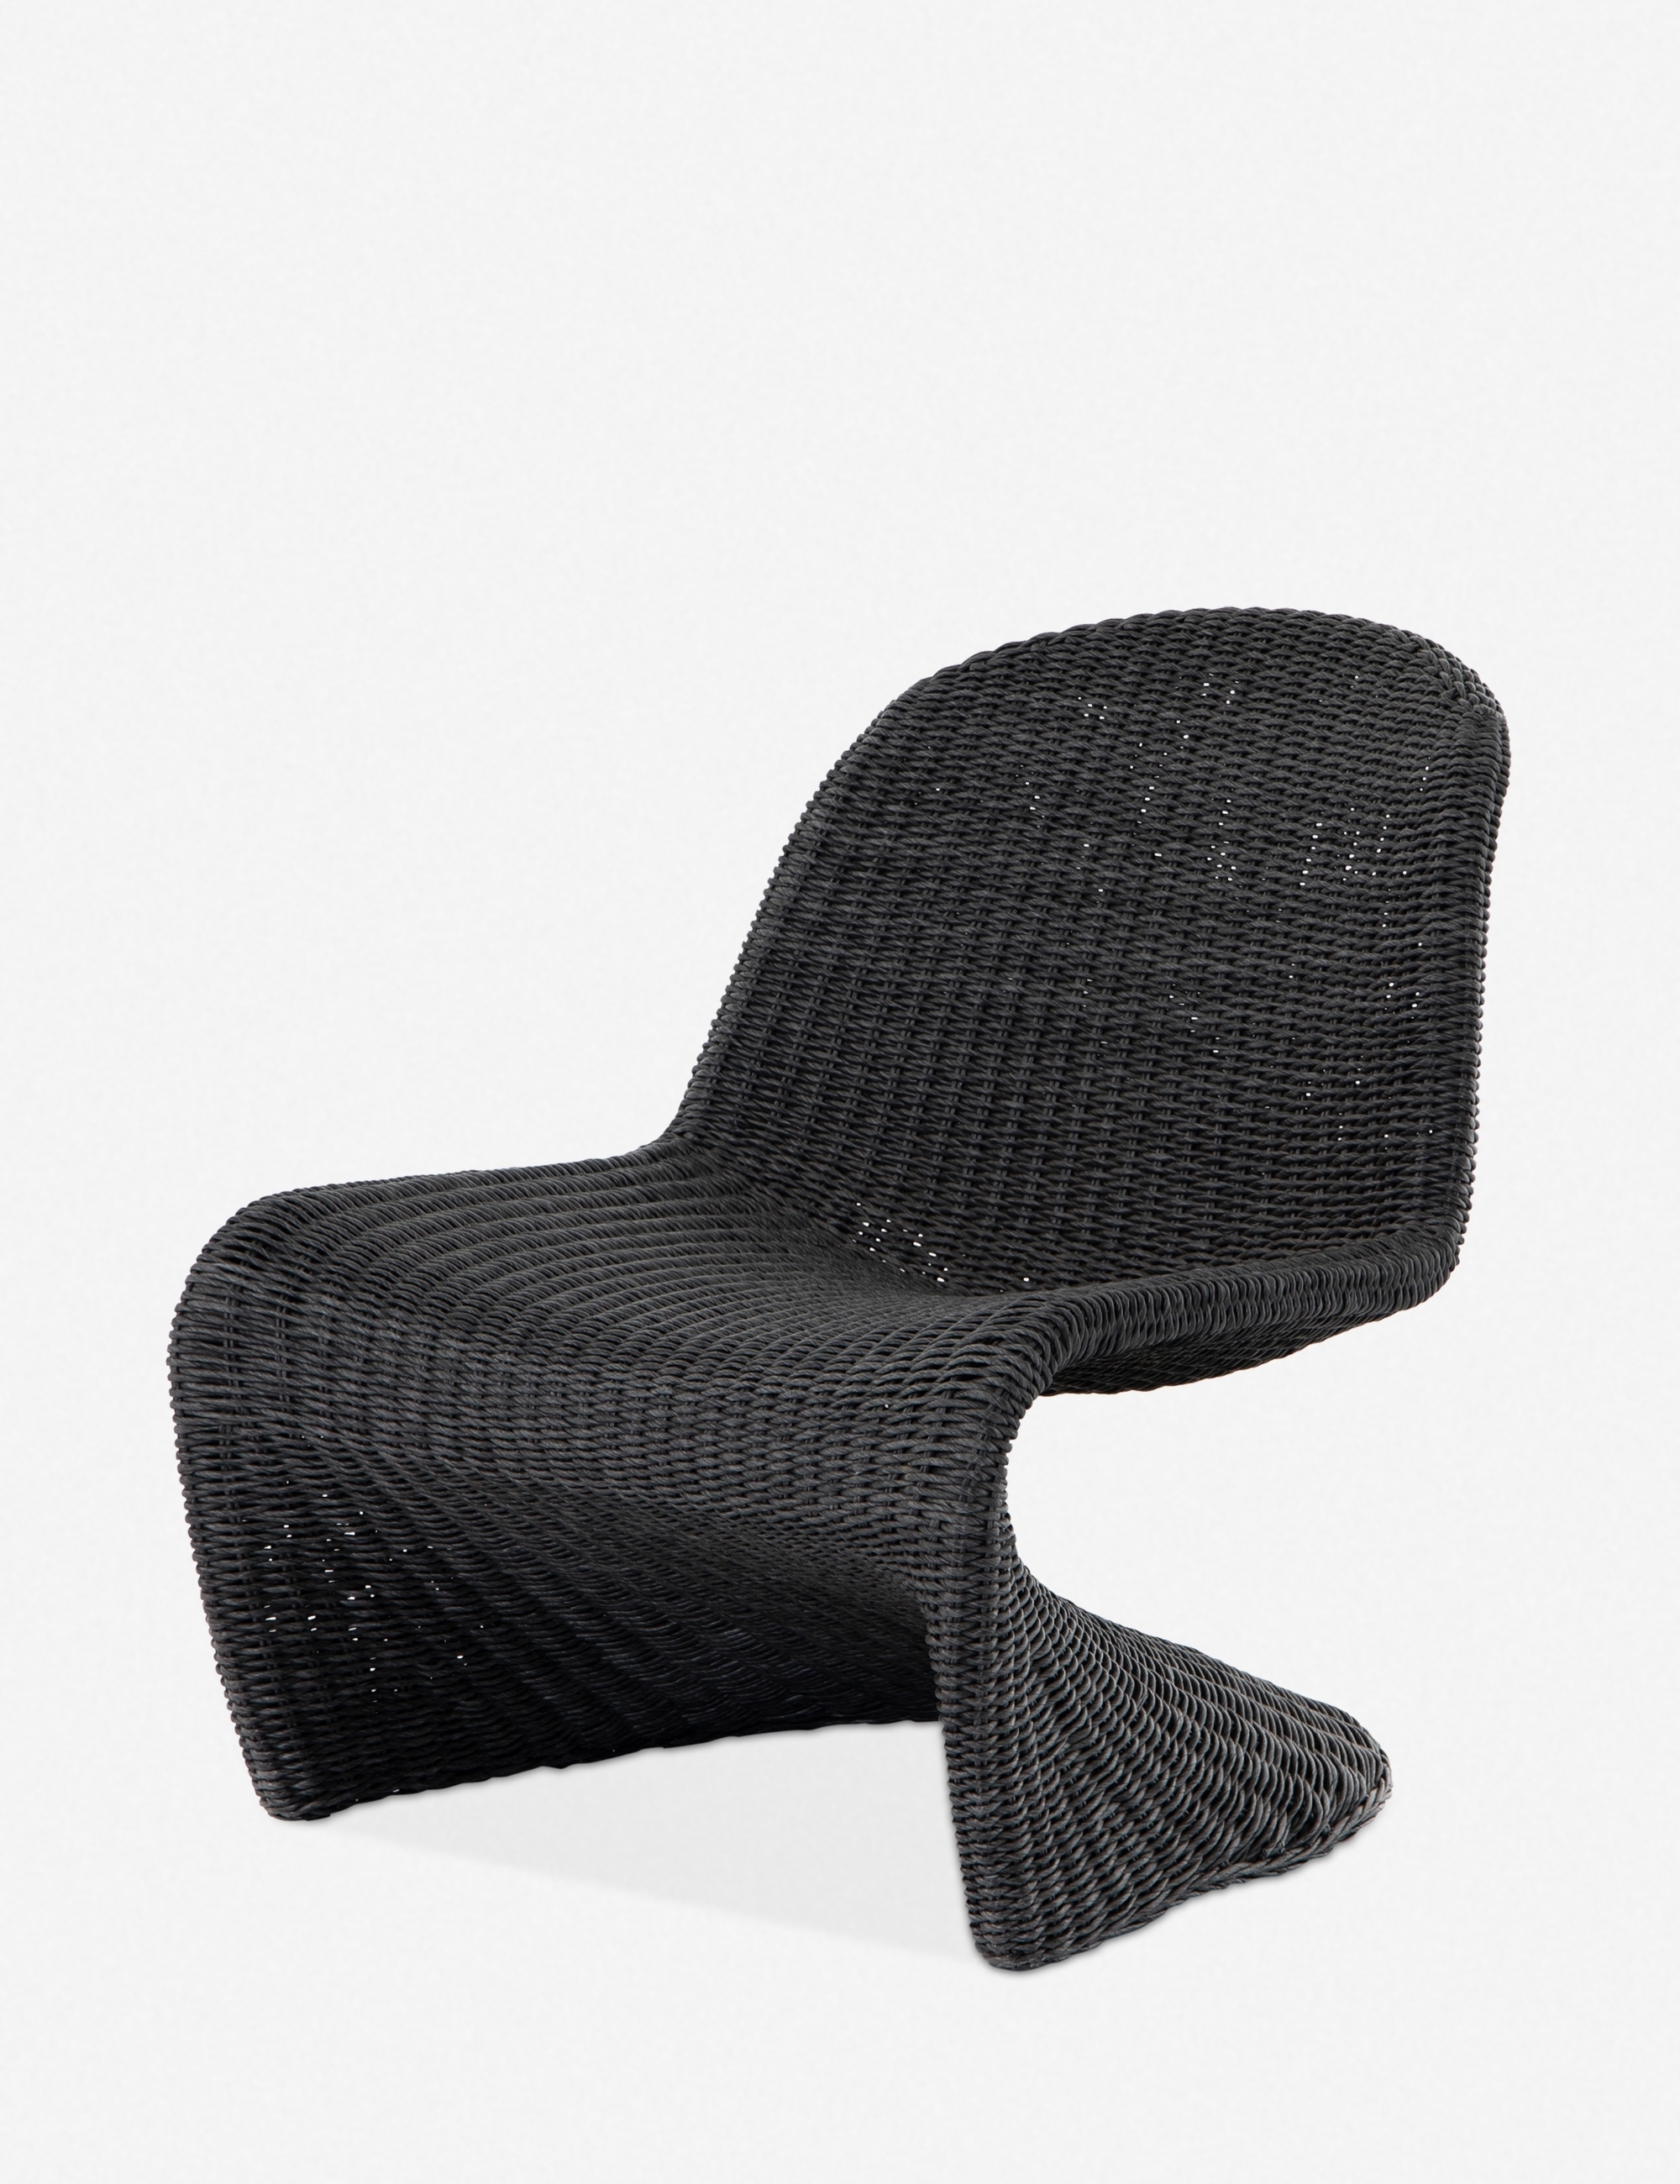 Manila Indoor / Outdoor Accent Chair - Image 2